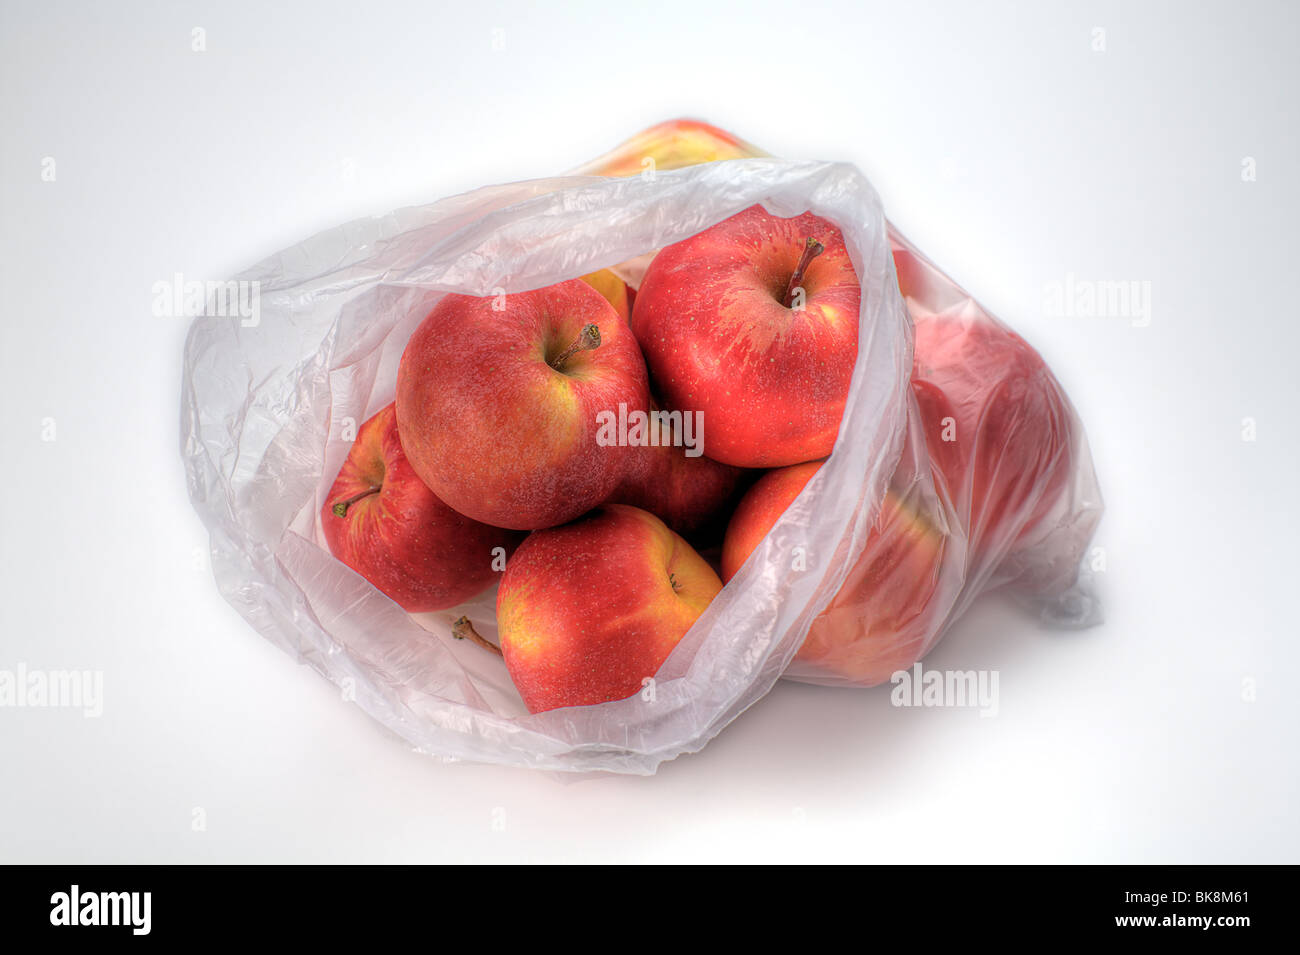 https://c8.alamy.com/comp/BK8M61/a-plastic-bag-of-gala-apples-isolated-on-white-BK8M61.jpg